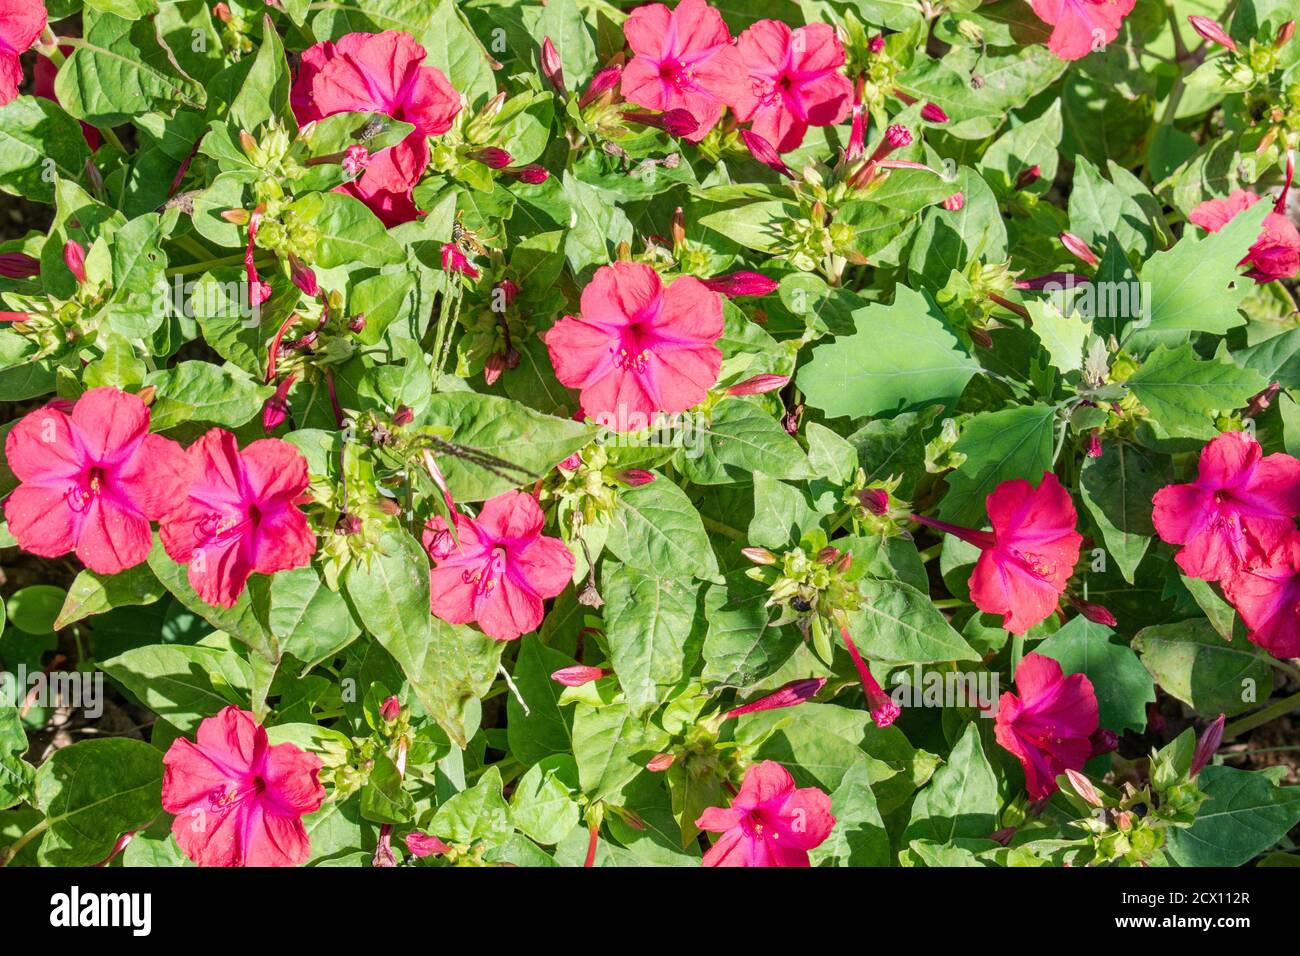 Close up of four o'clock flower, marvel of Peru, Mirabilis jalapa Stock Photo